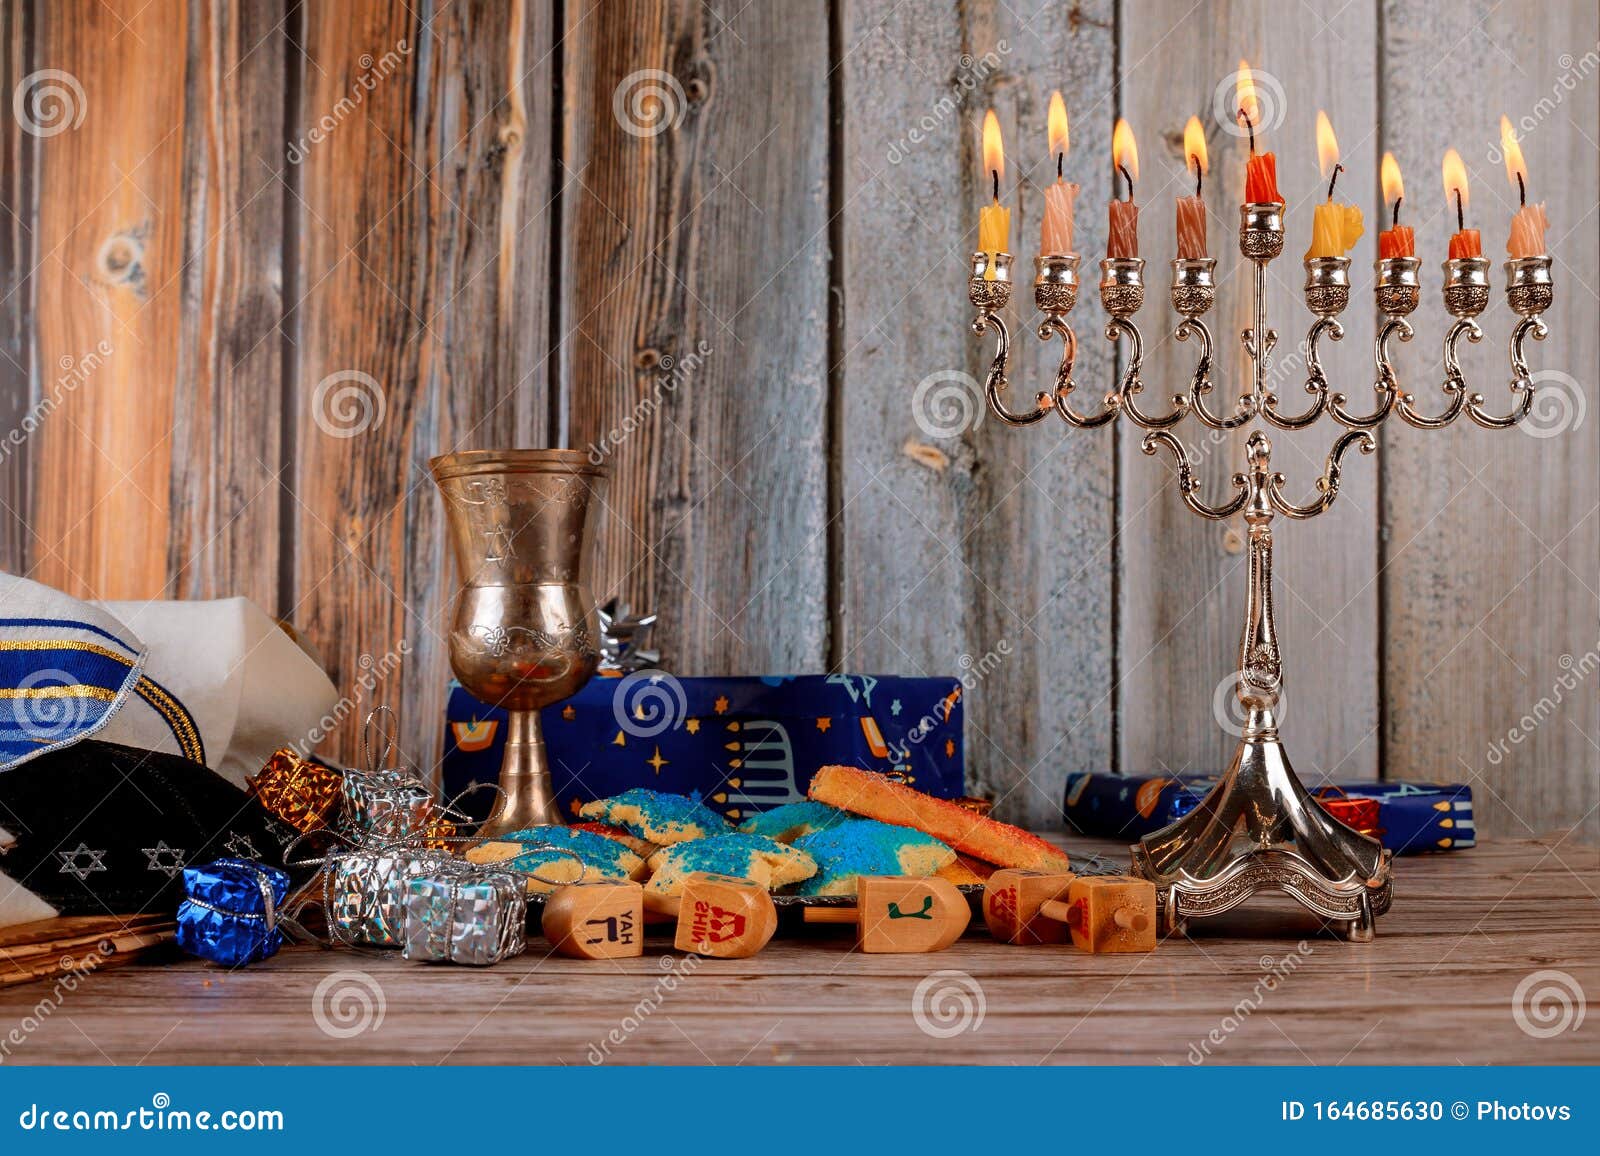 jewish holiday hanukkah with menorah traditional candelabra and wooden dreidels spinning